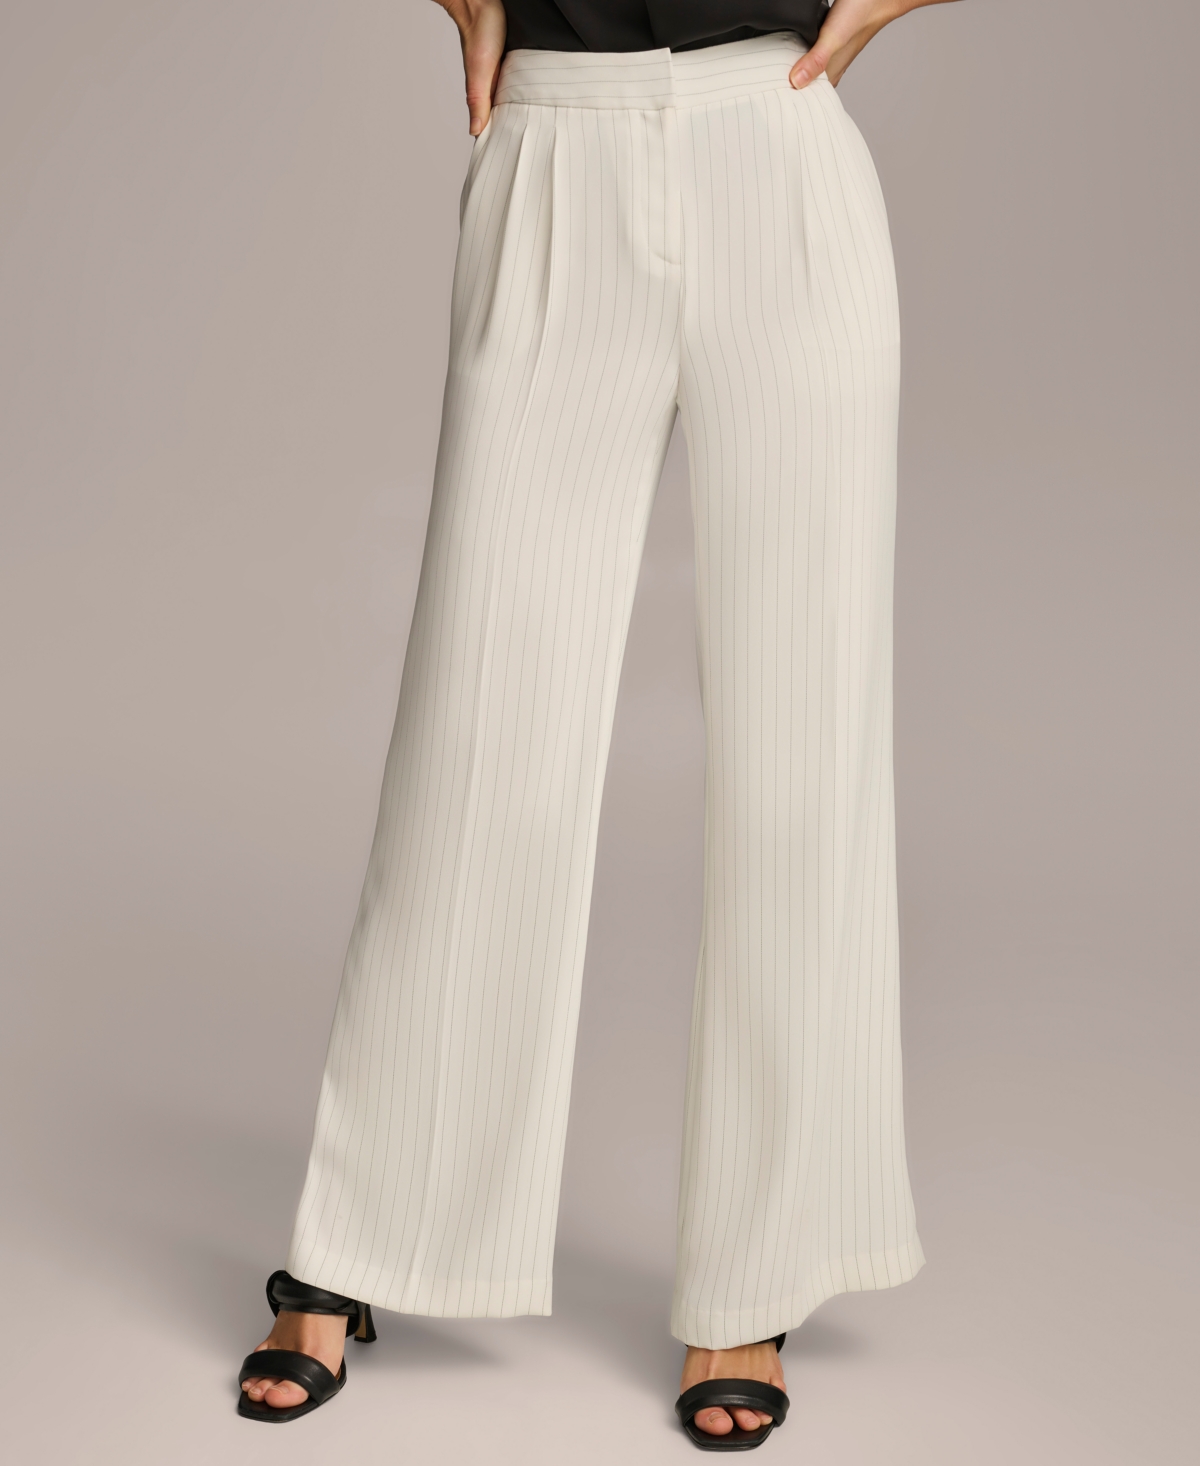 Women's Pinstripe Wide-Leg Pants - Cream/Black